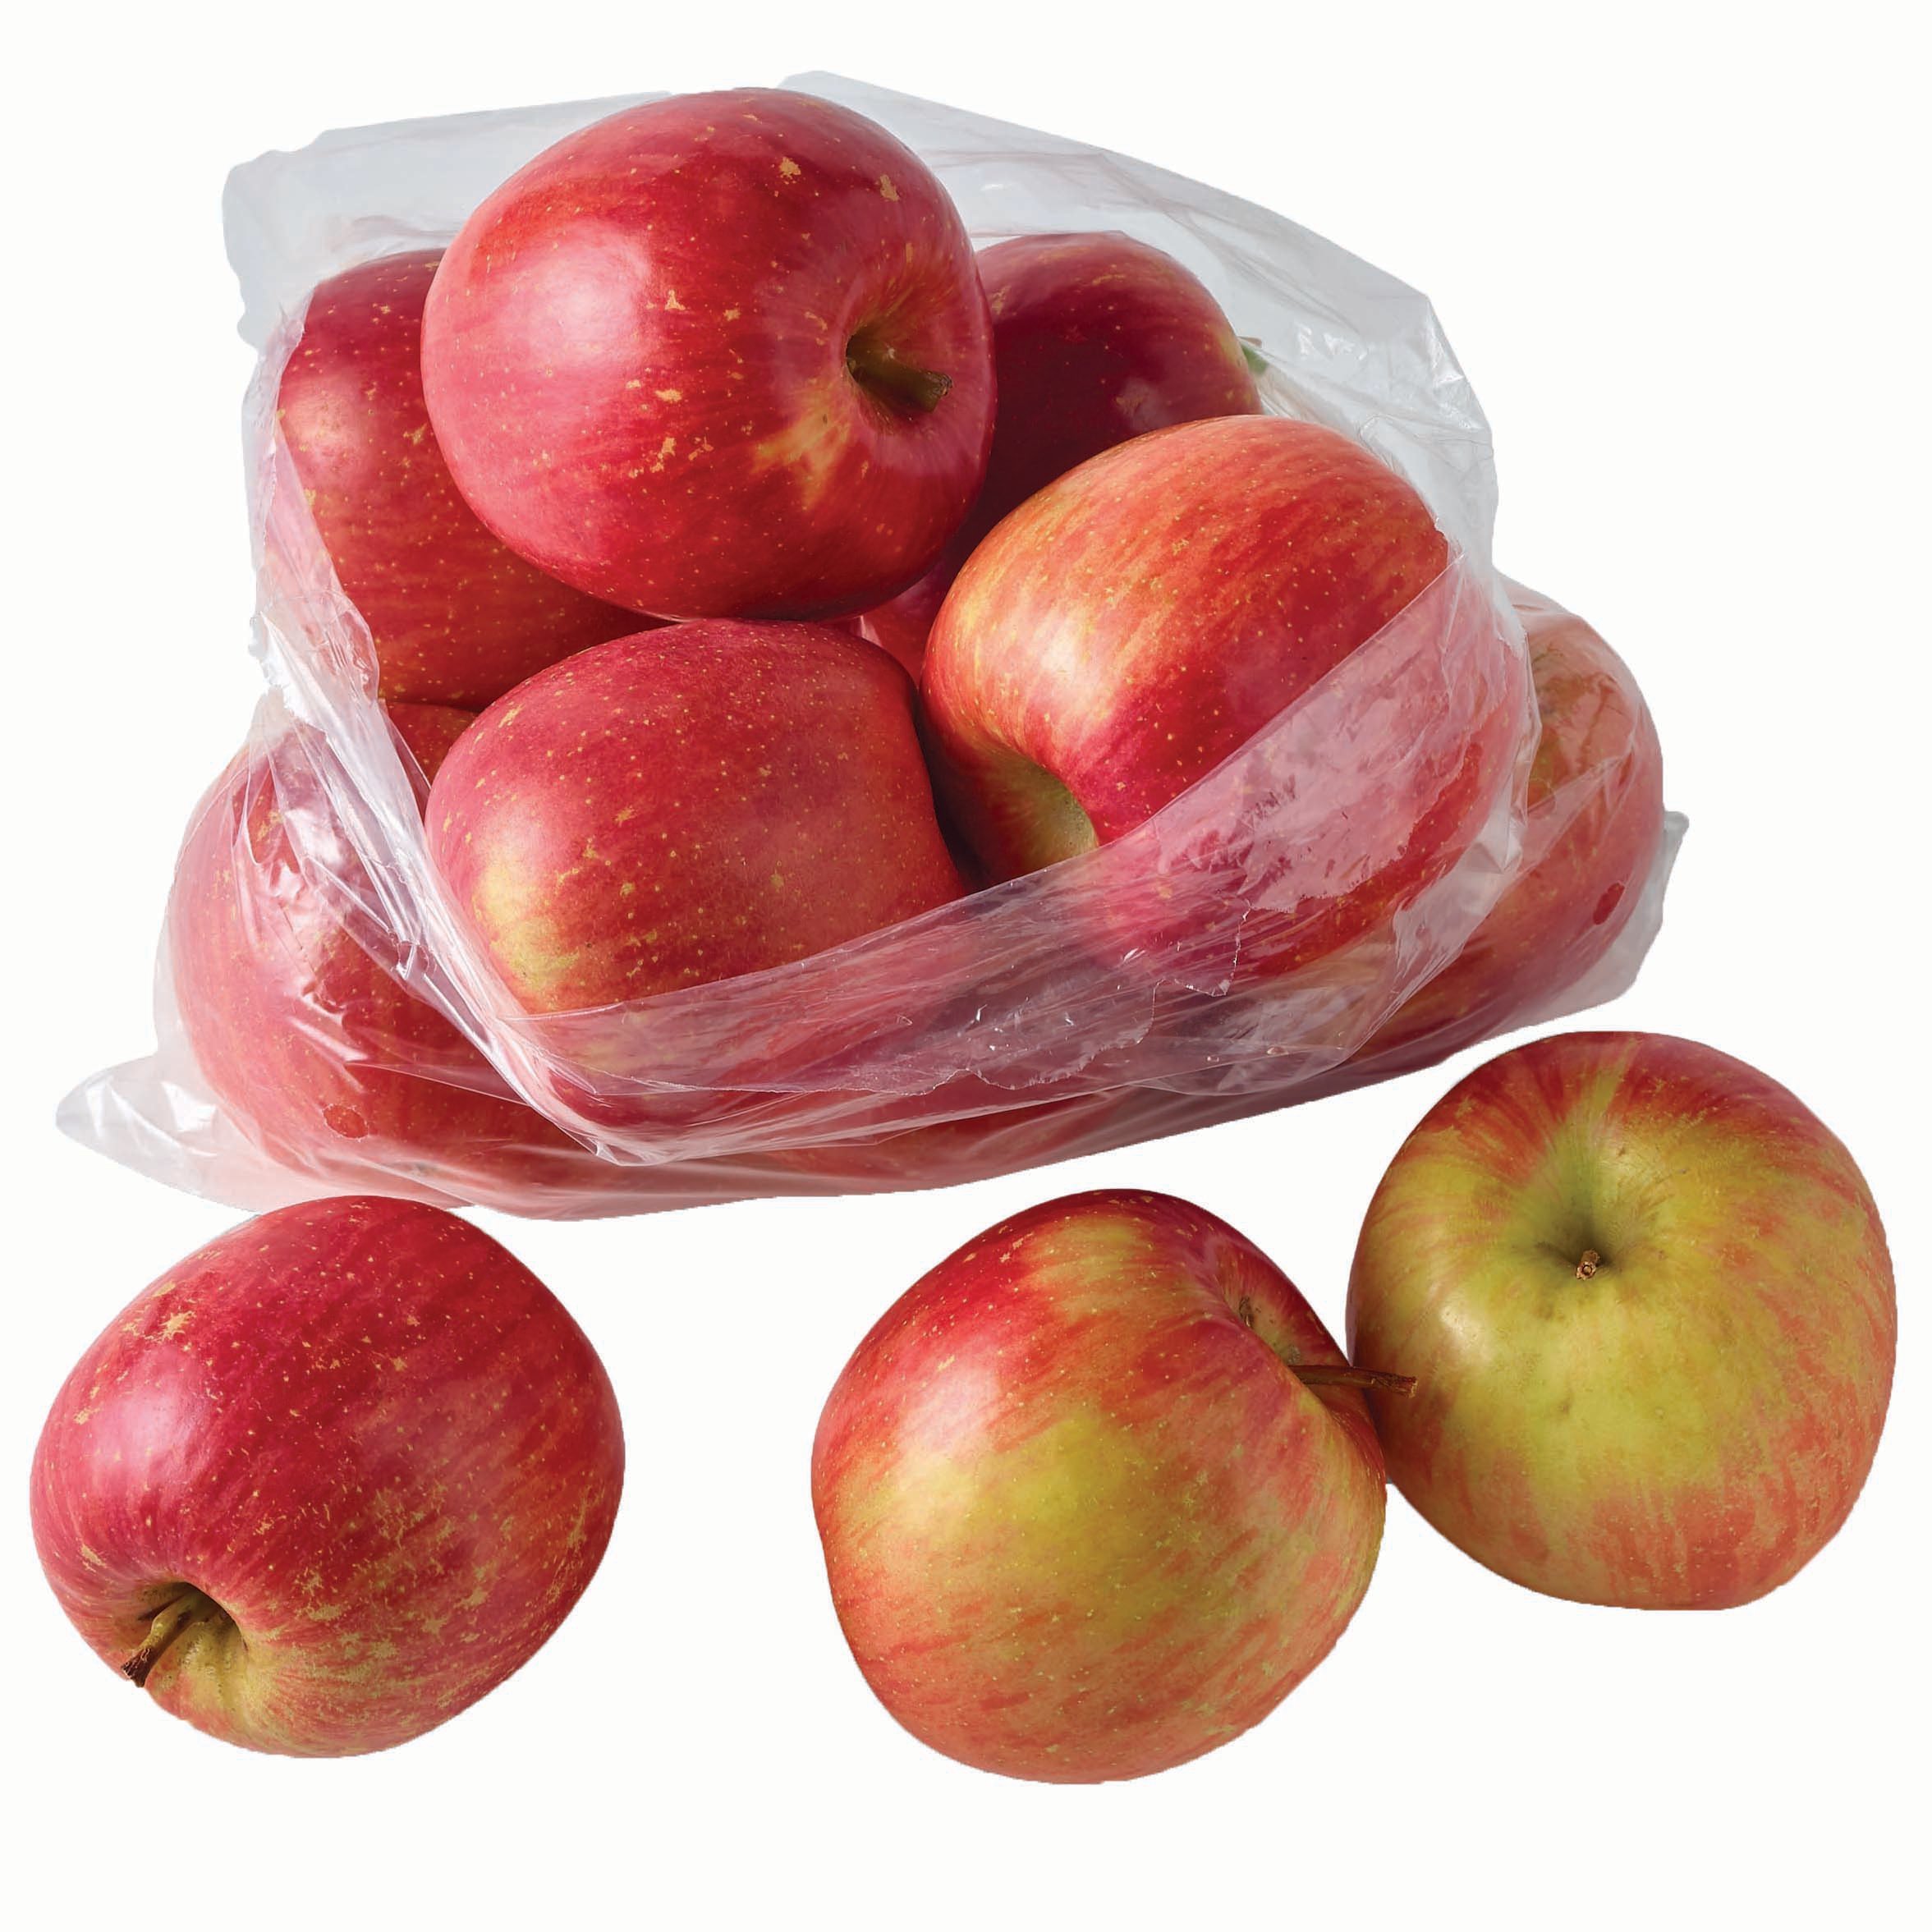 BoxNCase Organic Fuji Apples 2 LB